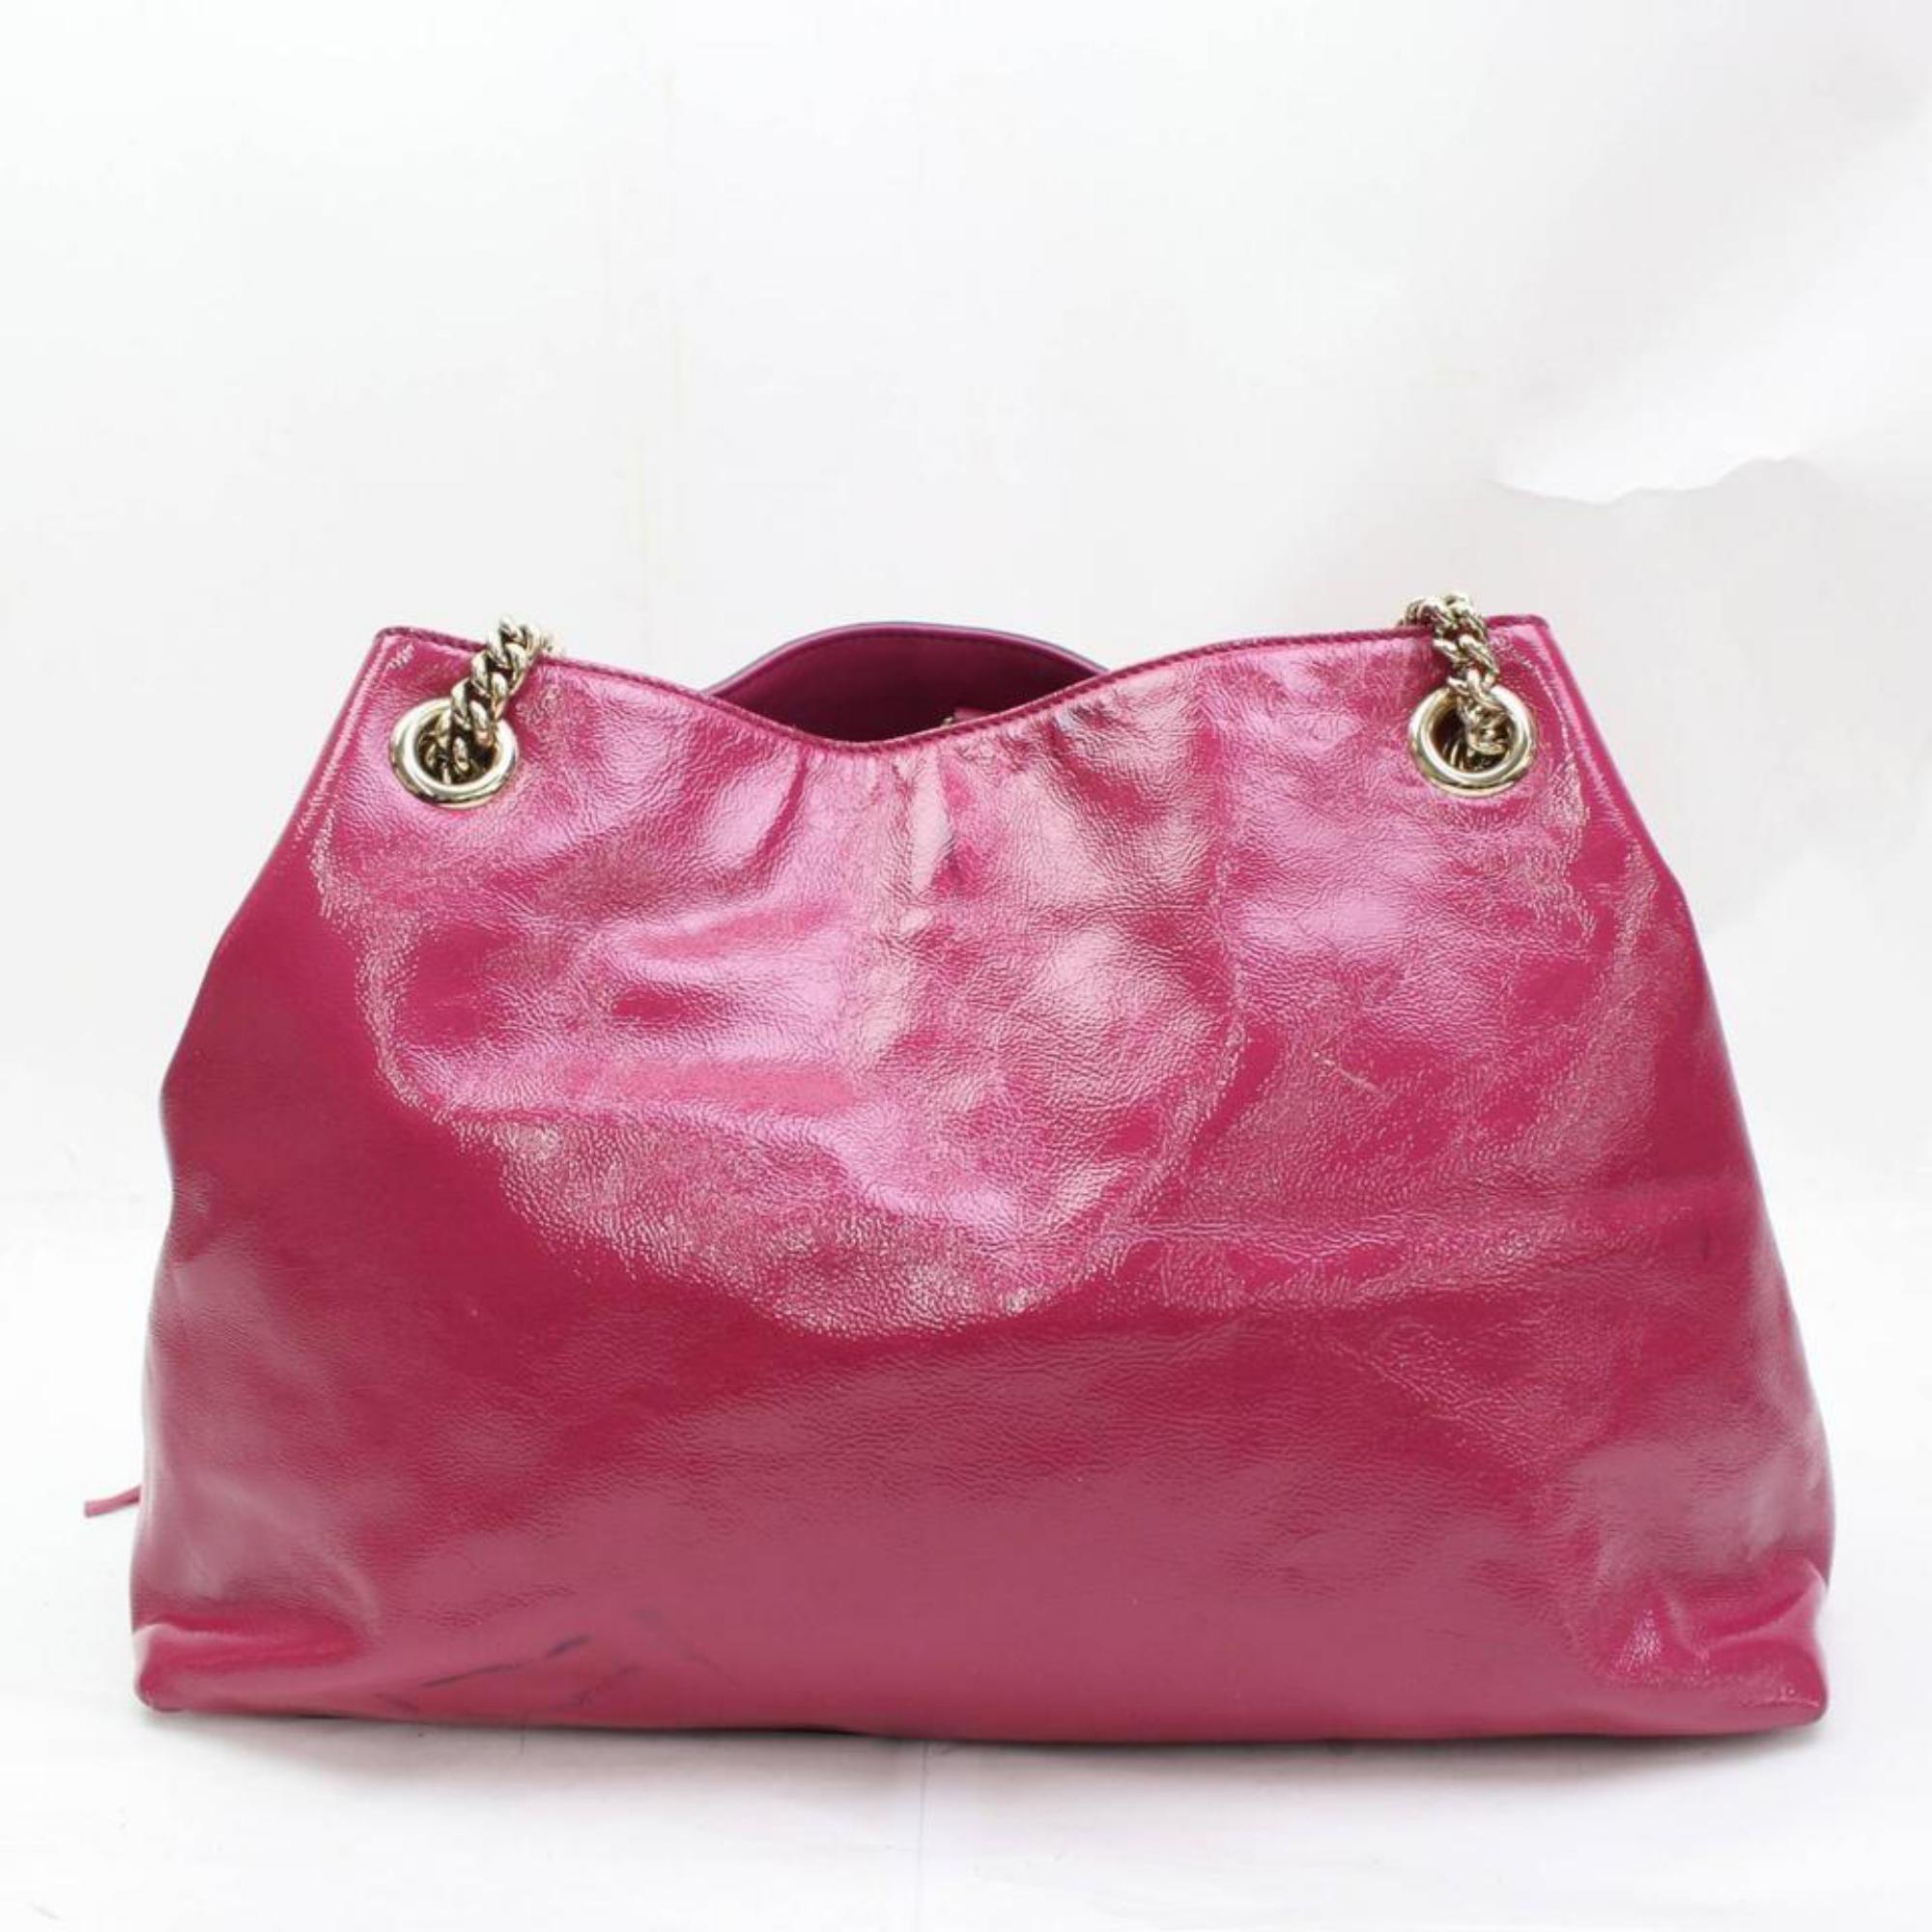 Gucci Soho Chain Tote 867472 Fuchsia Patent Leather Shoulder Bag For Sale 1